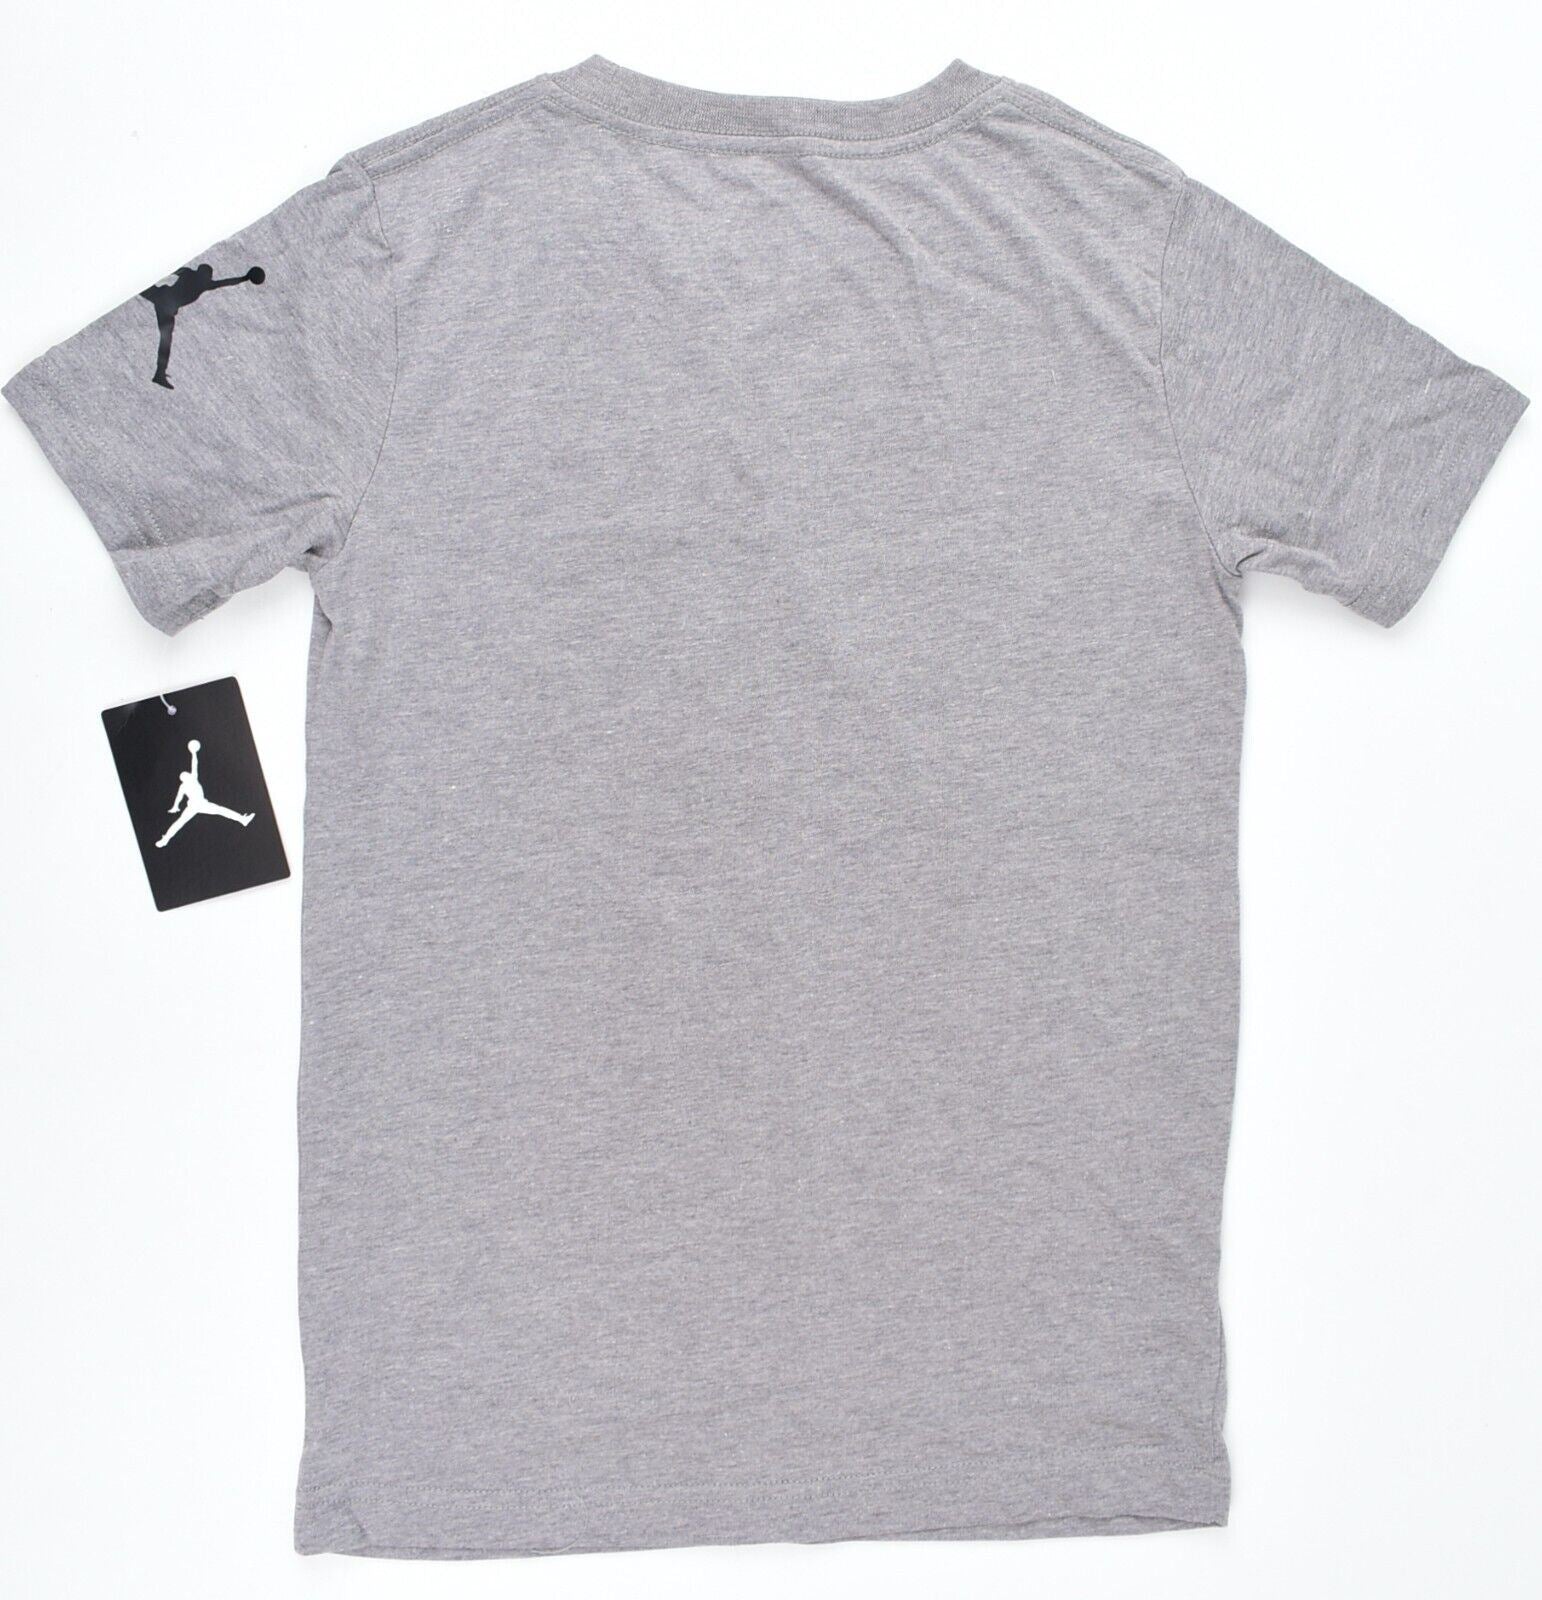 NIKE AIR JORDAN Boys Kids Logo Print T-shirt, Grey, size 8-10 years